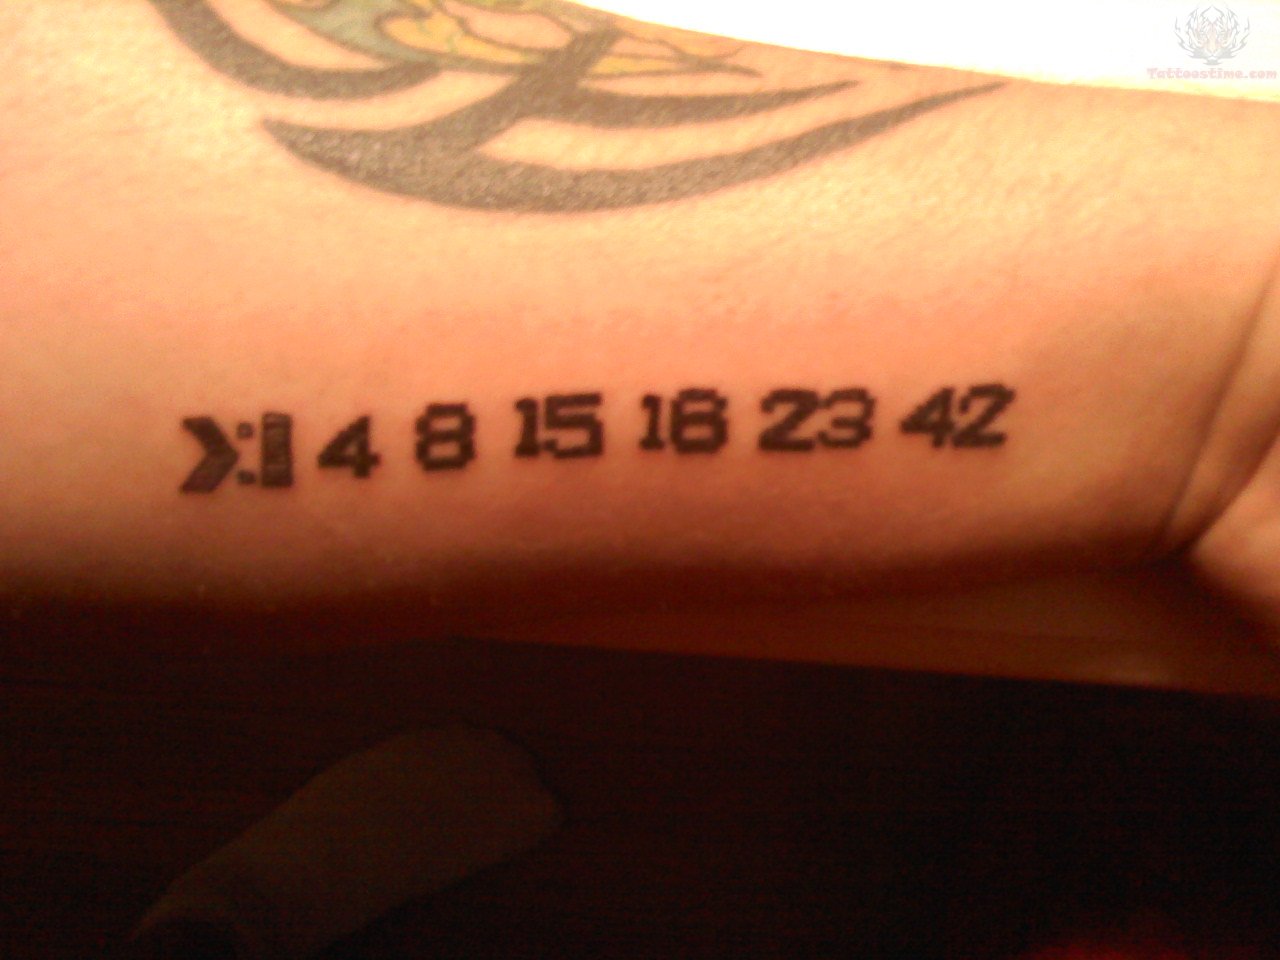 Small Digital Black Numbers Tattoo On Wrist